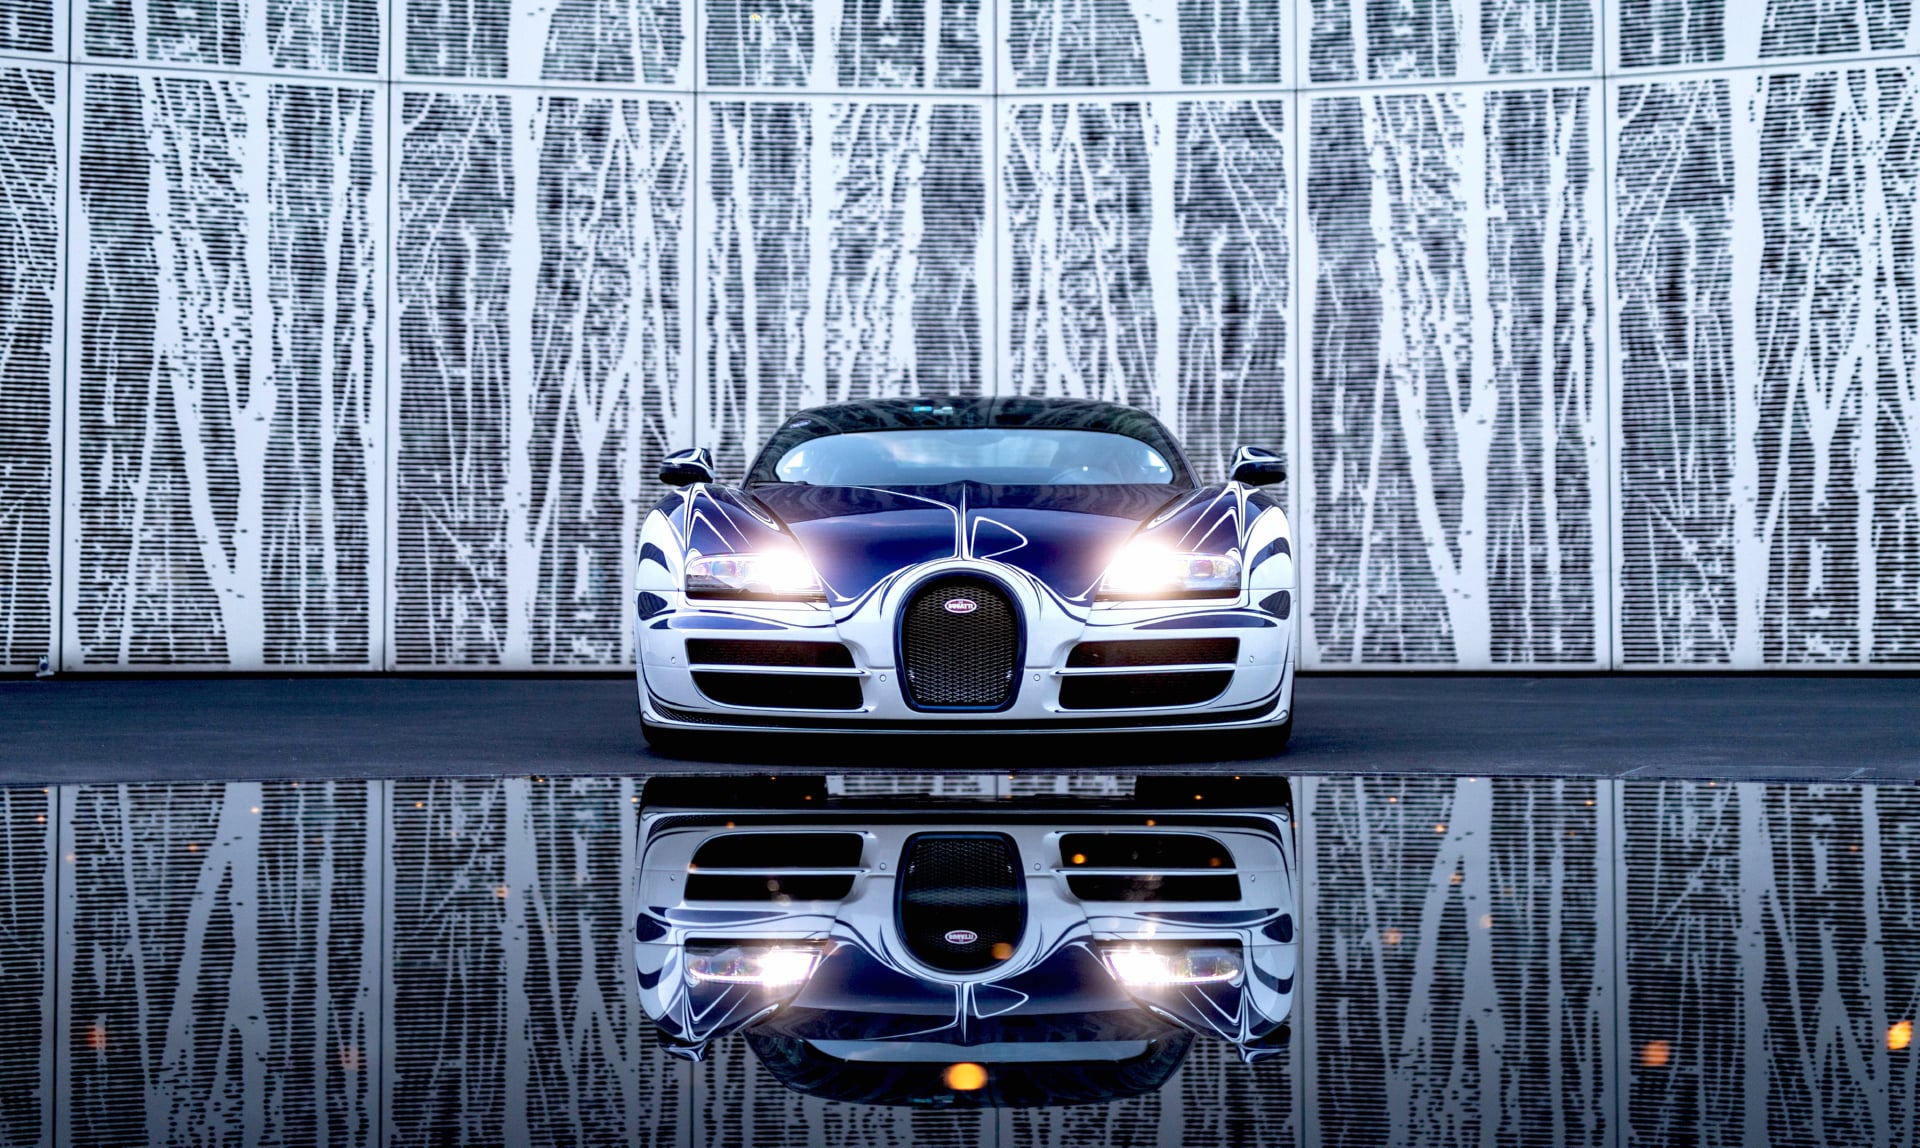 Bugatti Veyron Grand Sport Roadster at 1024 x 1024 iPad size wallpapers HD quality